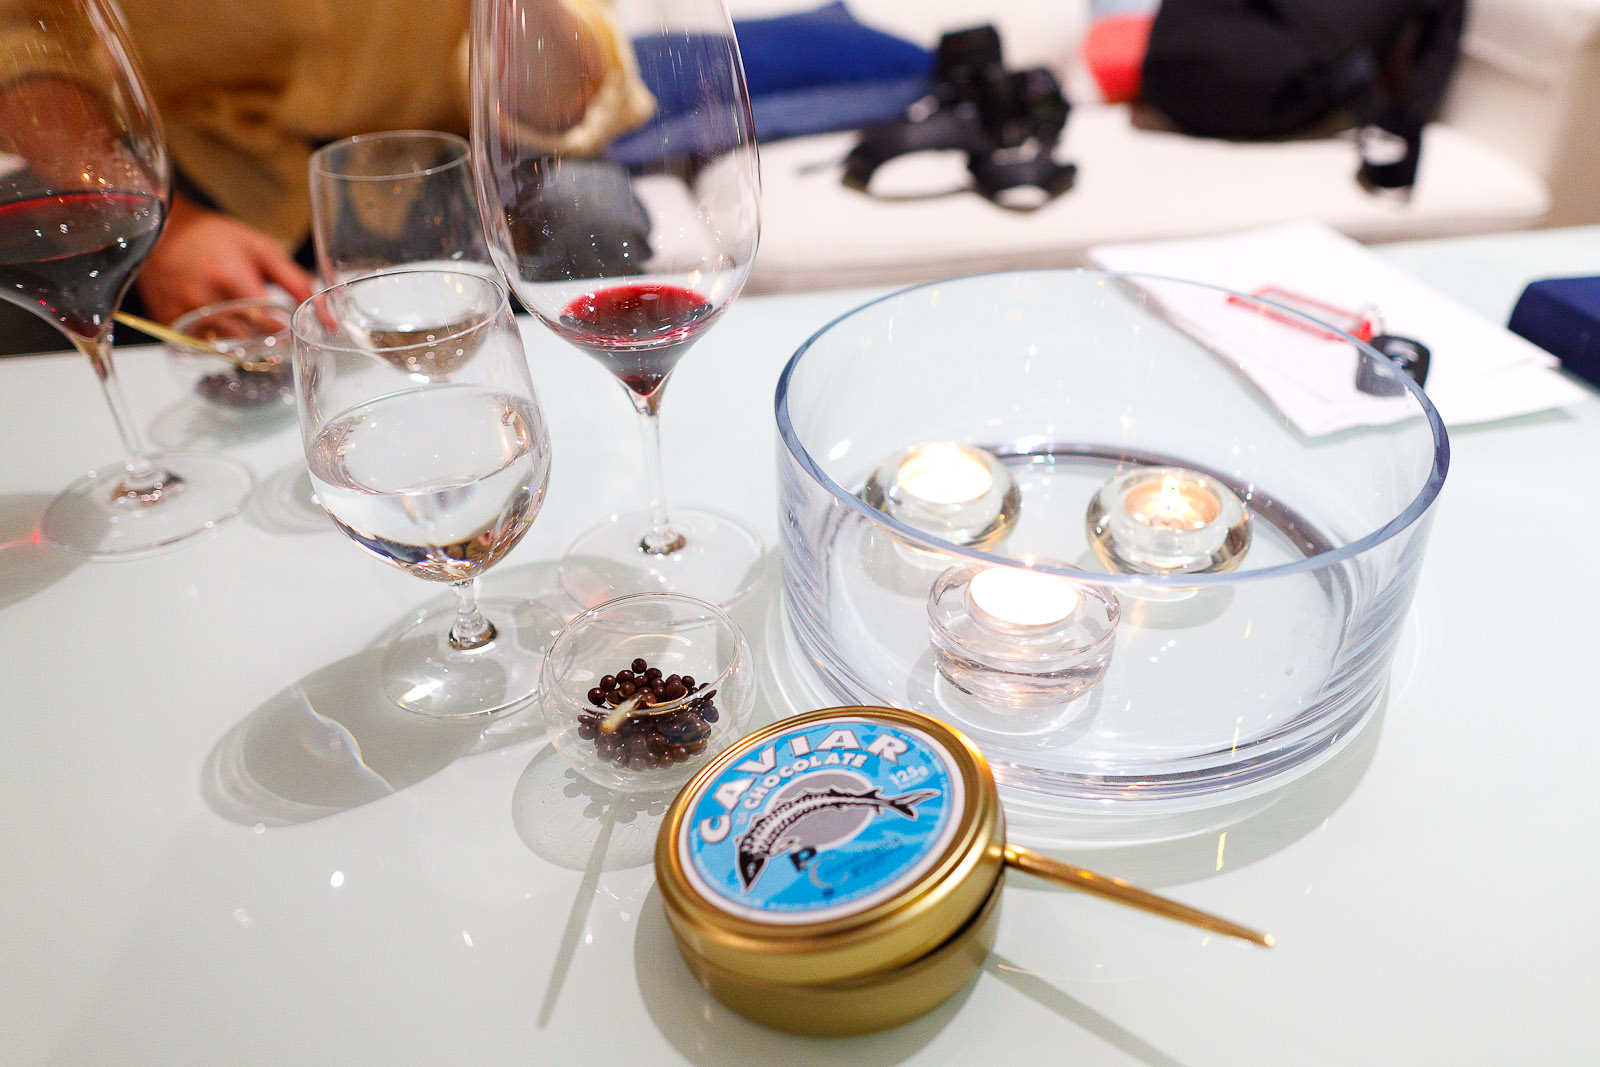 Petits fours: chocolate caviar